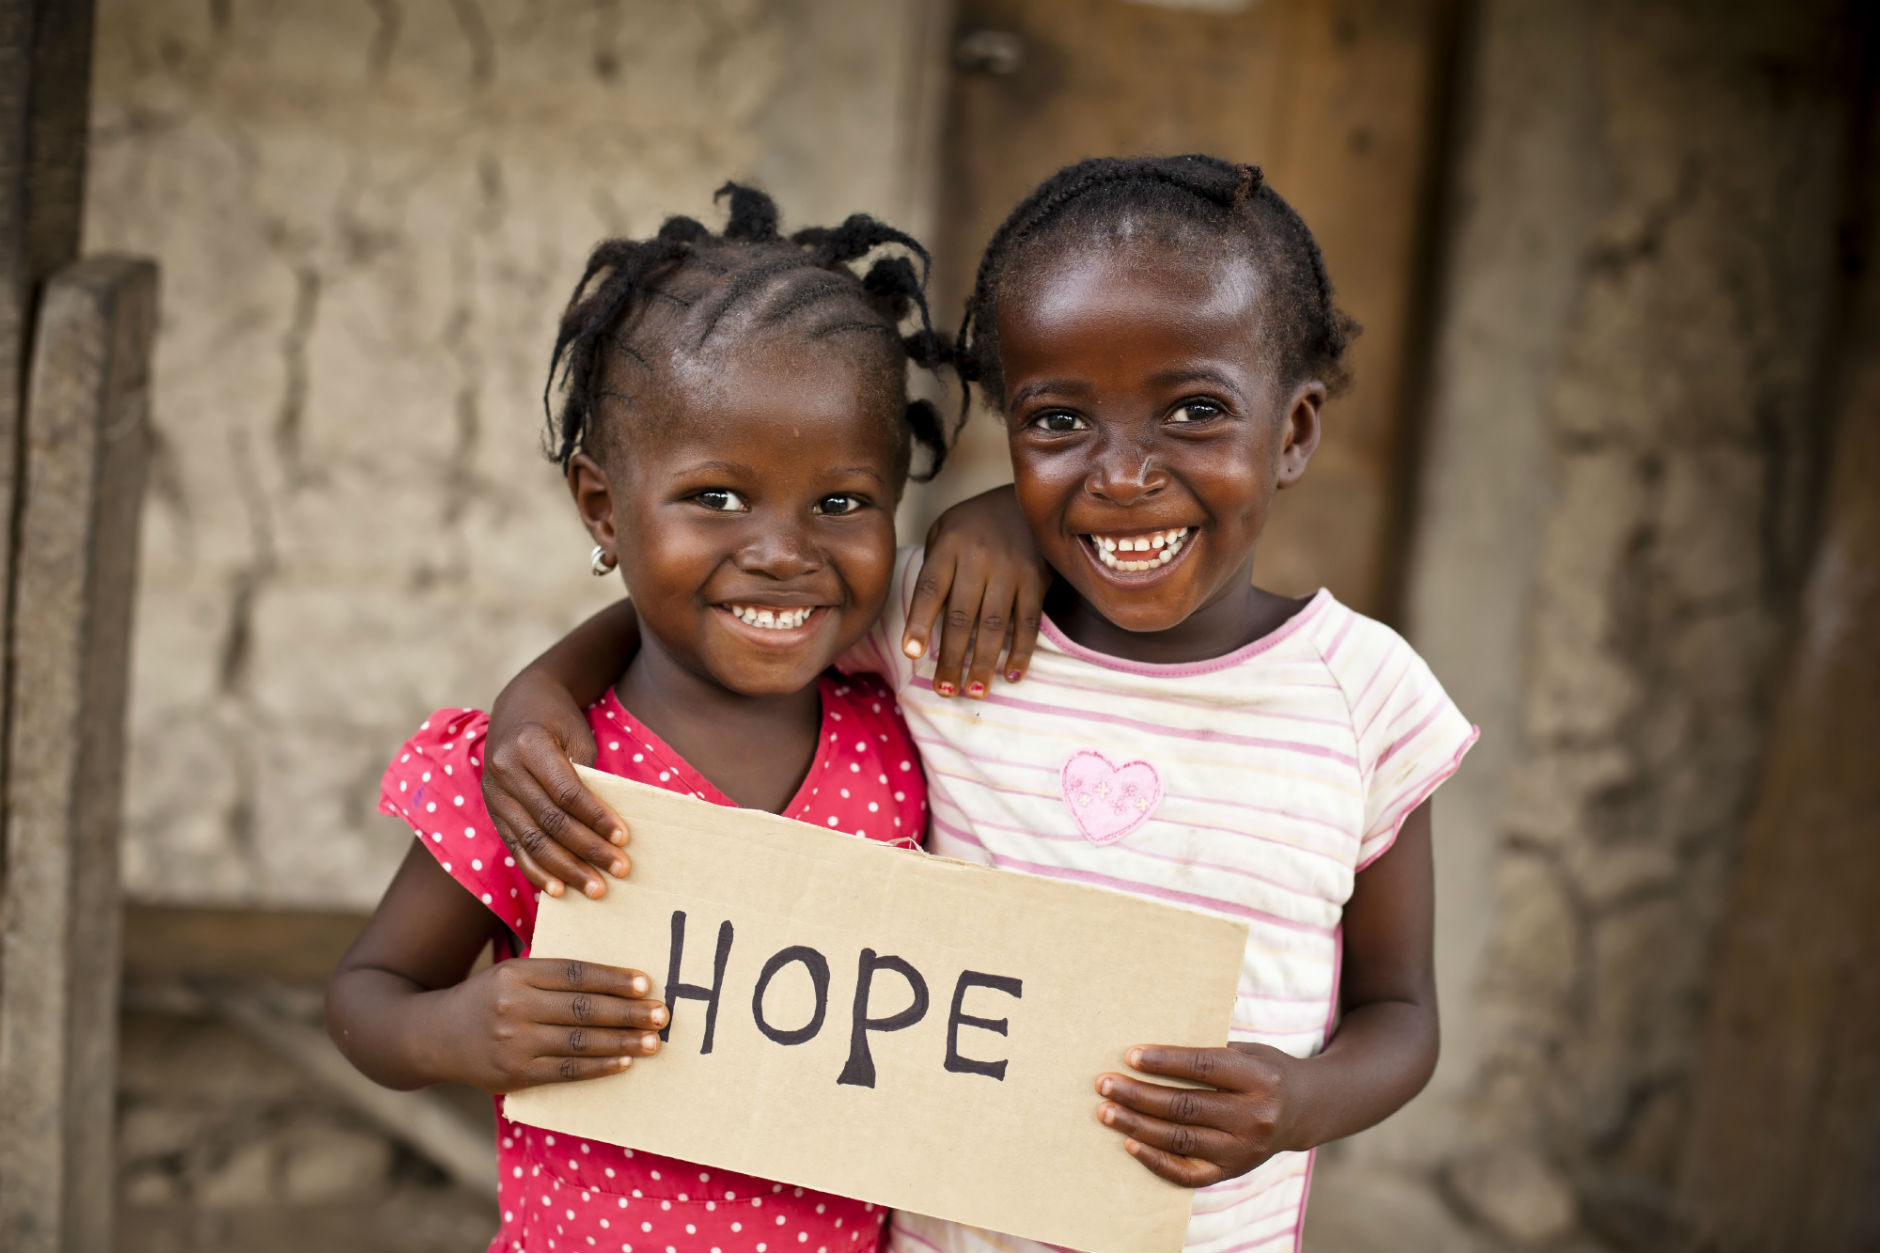 Fill in burst senior charity. Дети Африки радостные. Африка для малышей. Африканские детишки.